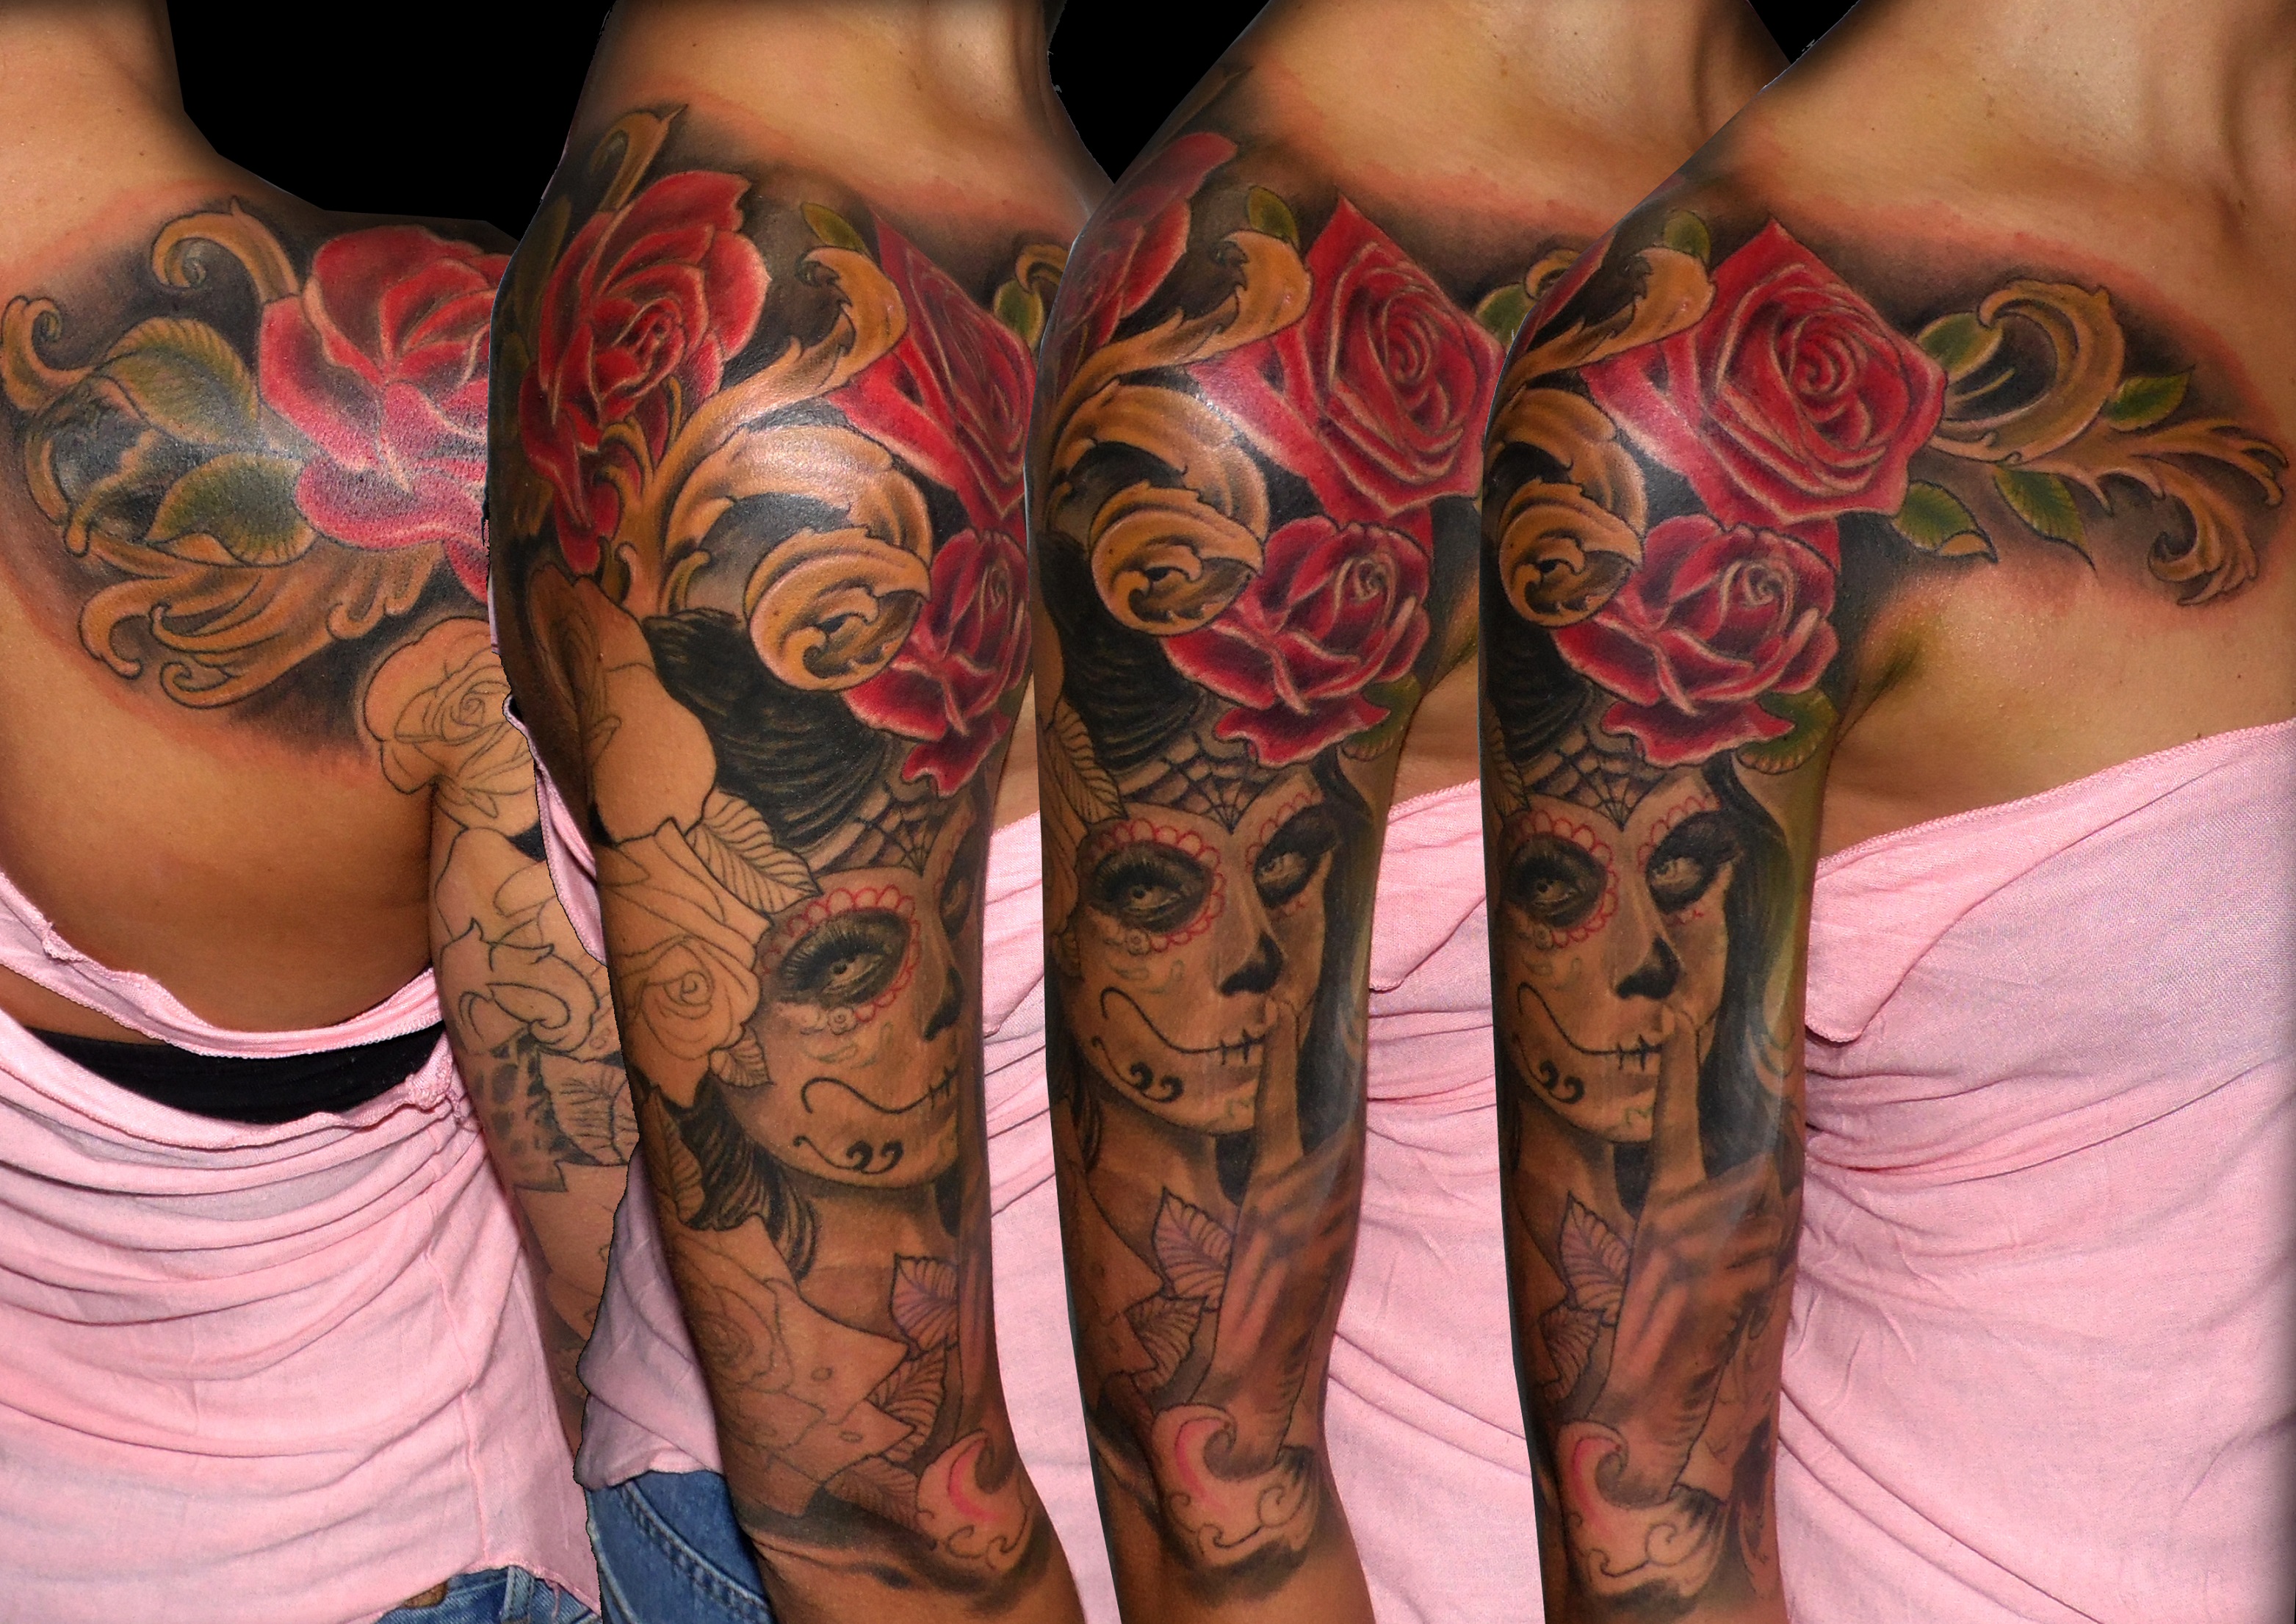 catrina en progreso trecepicas tattoo 13depicas jaca huesca tatuajes katrinas madein13 spain españa tatuadores roses rosas color brazo hombro pecho